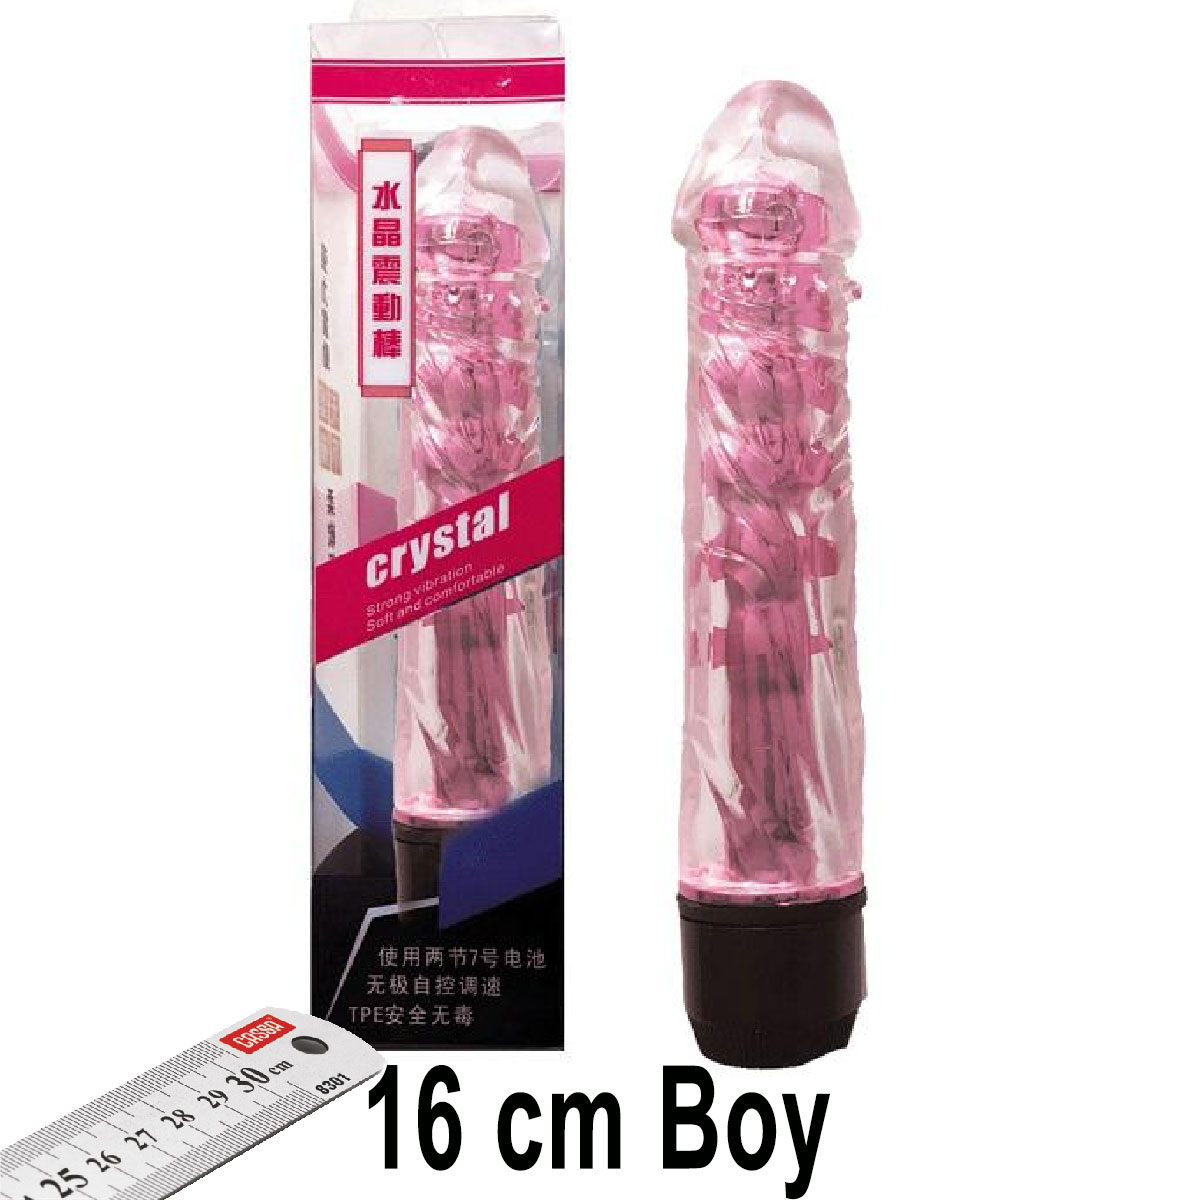 Crystal 16 cm Boy Mor Renk Vibratr ve Zevk Kilifi Seti AL-Q028-2